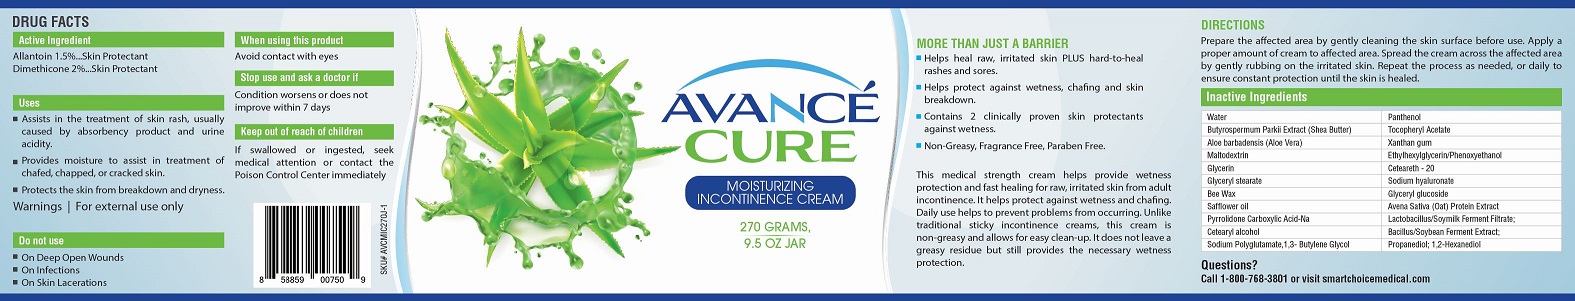 Avance Cure Moisturizing Incontinence Cream | Allantoin, Dimethicone Cream while Breastfeeding